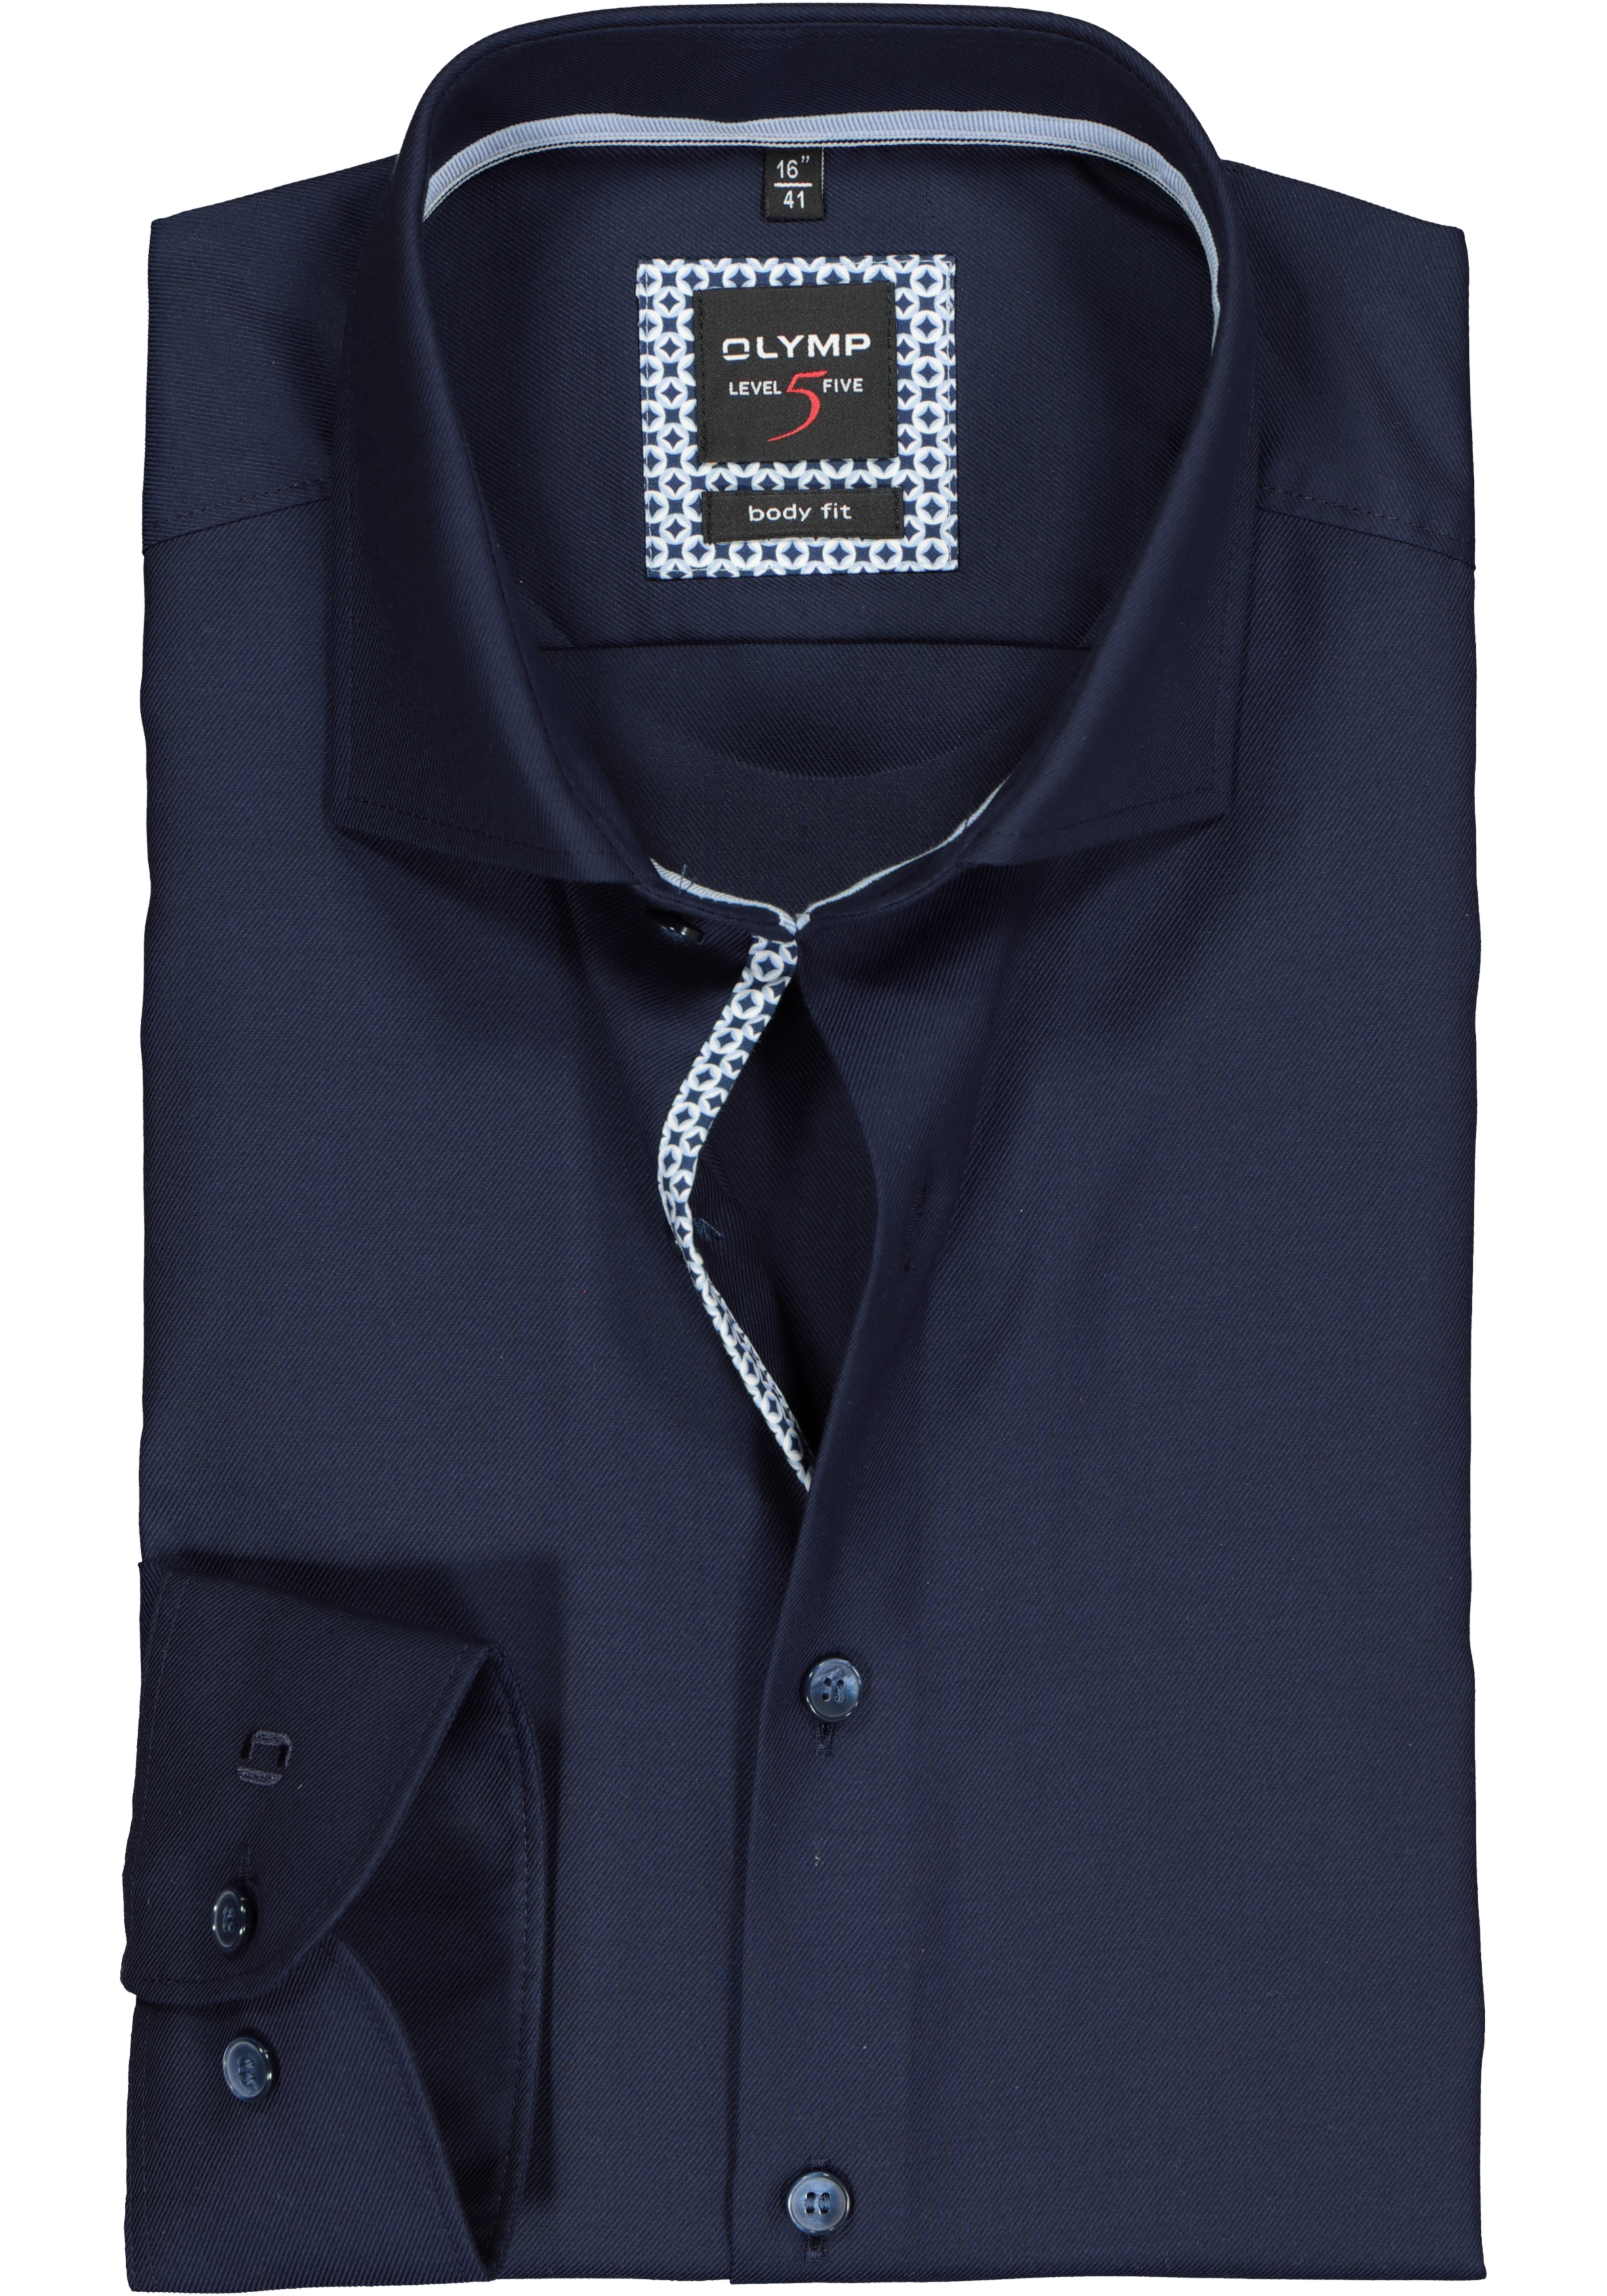 OLYMP Level 5 body fit overhemd, mouwlengte 7, nachtblauw twill (contrast)